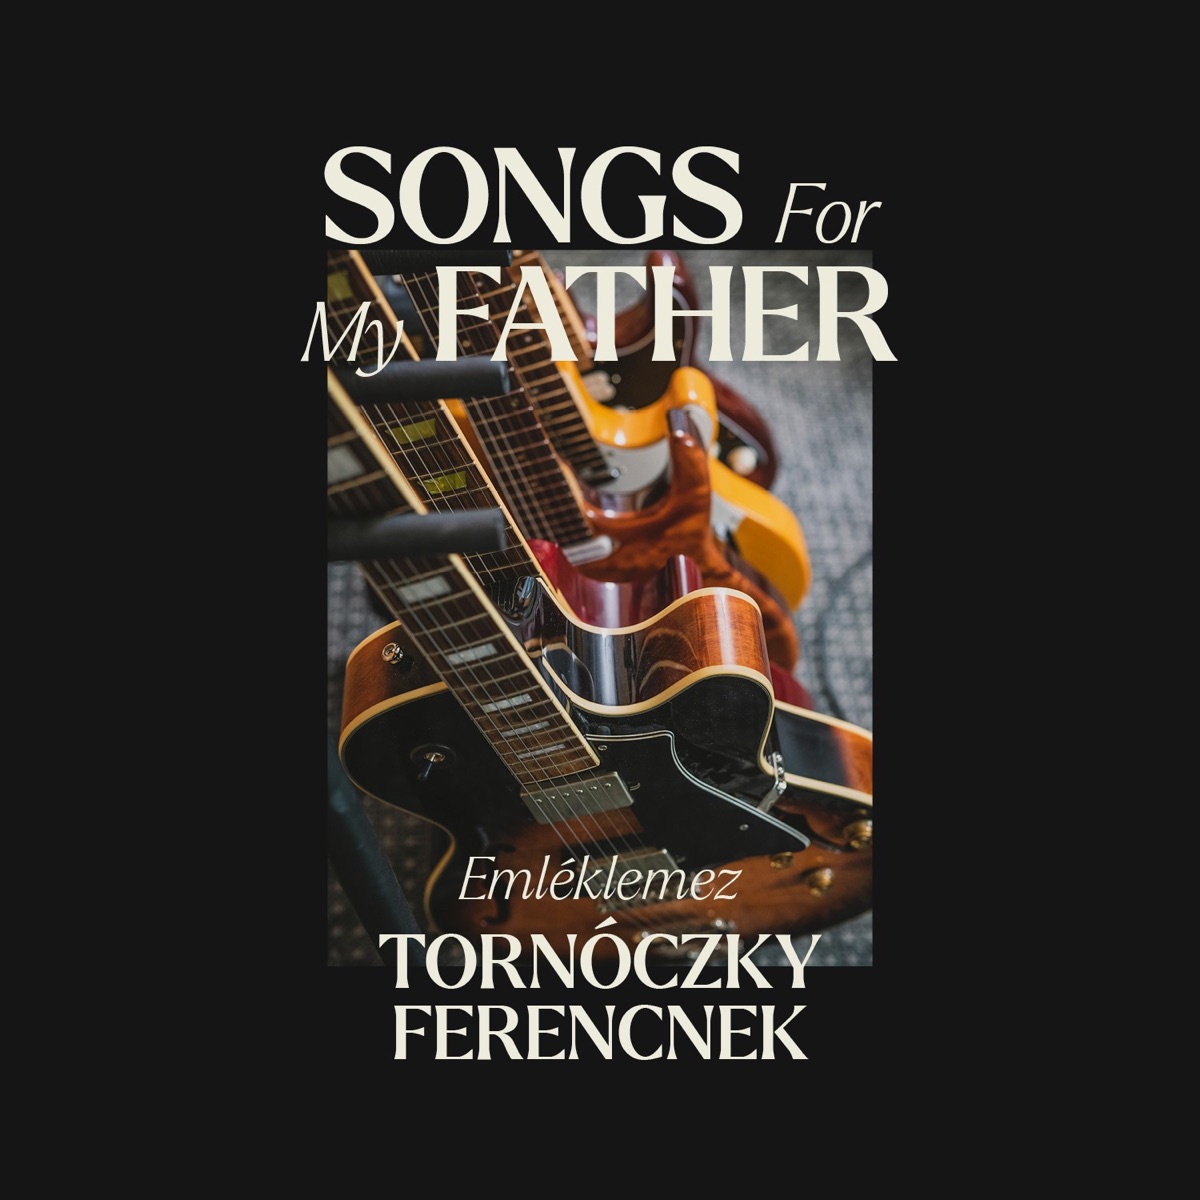 Songs For My Father (Emléklemez Tornóczky Ferencnek) de Ifj. Tornóczky  Ferenc en Apple Music